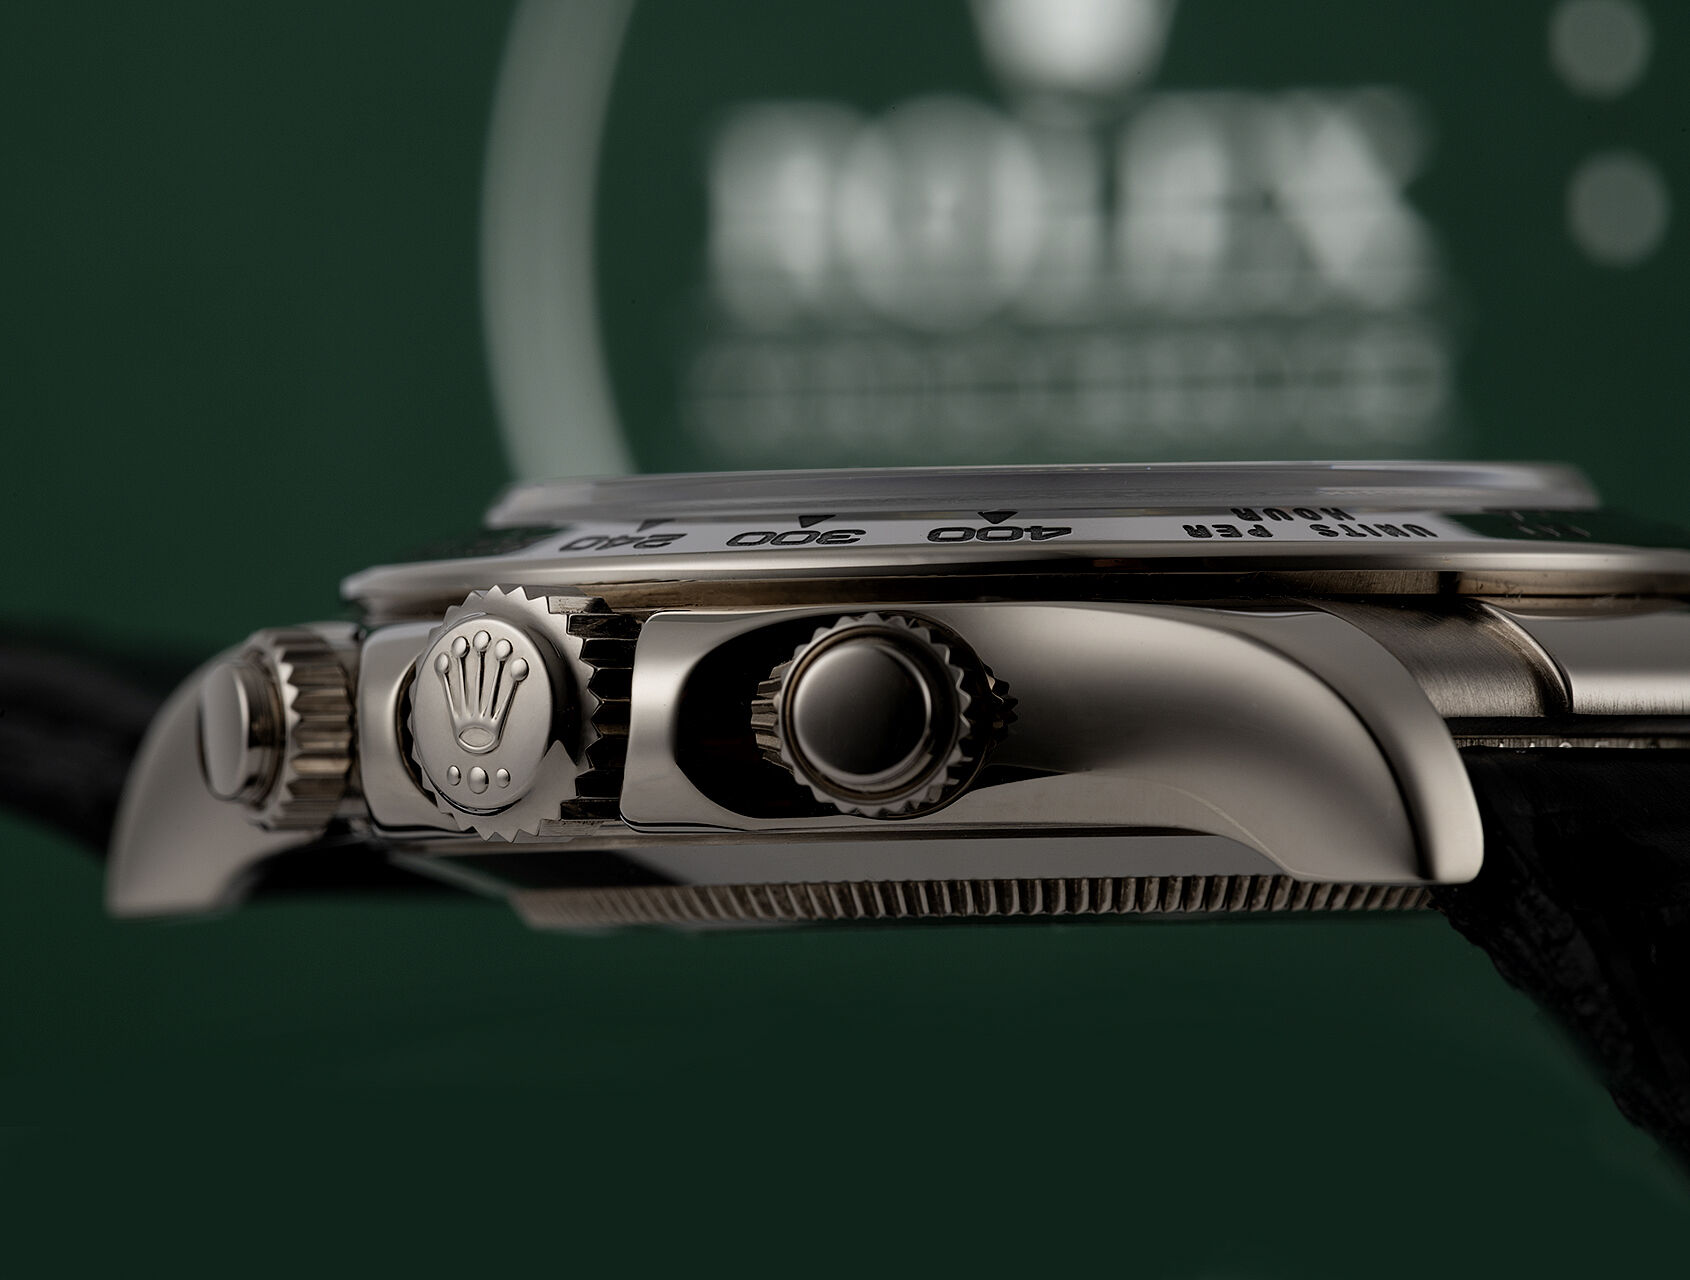 ref 116519 | 116519 - Rolex Warranty to 2023 | Rolex Cosmograph Daytona